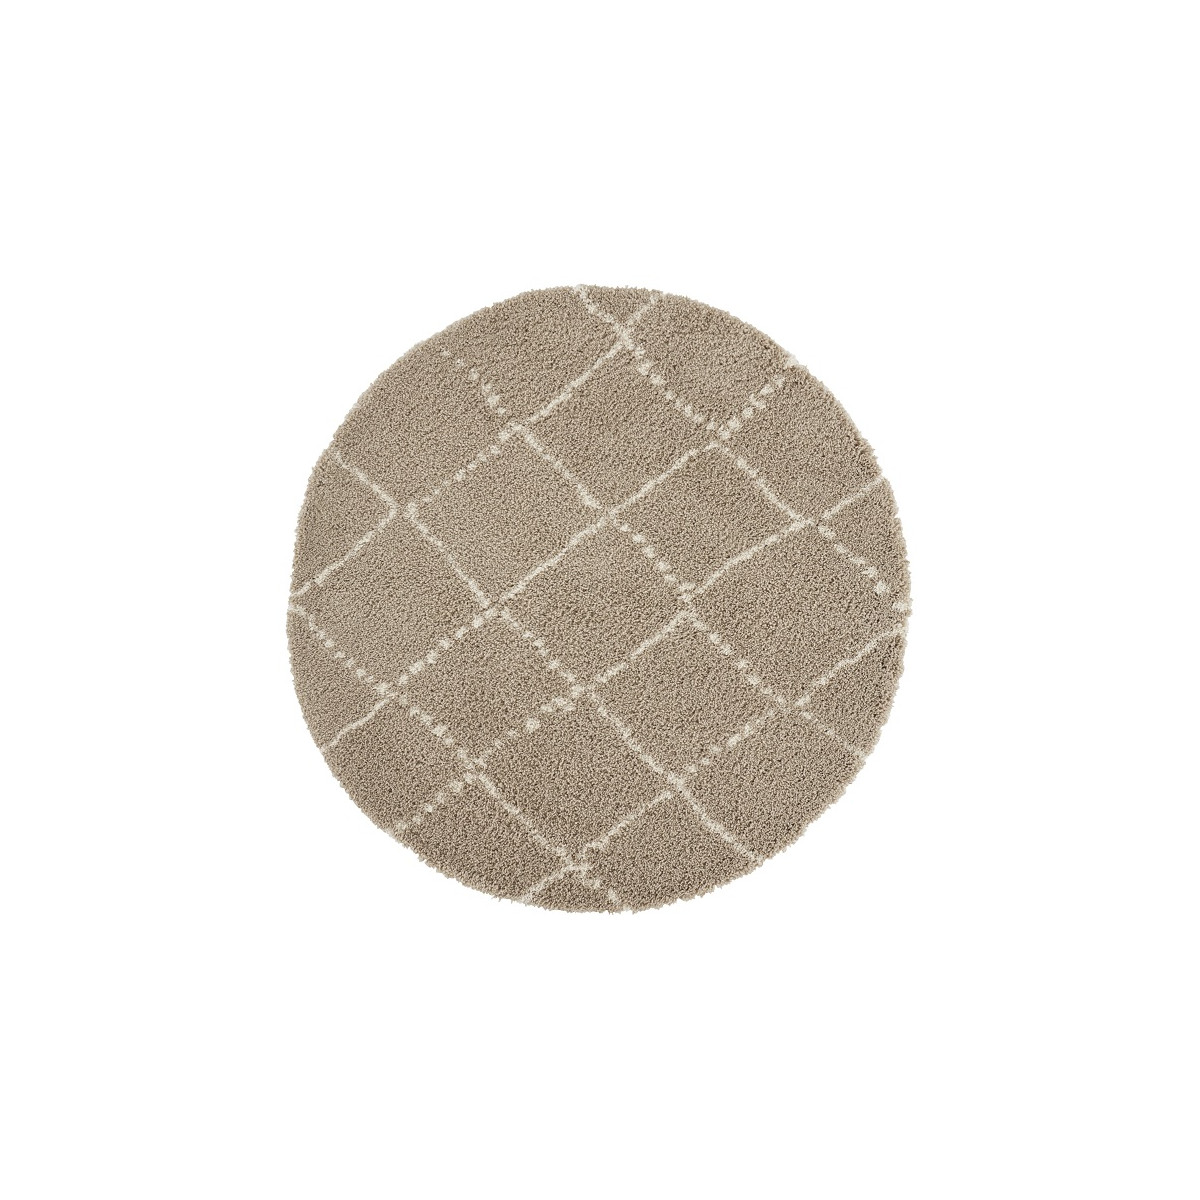 Kusový koberec Allure 104405 Beige/Cream kruh